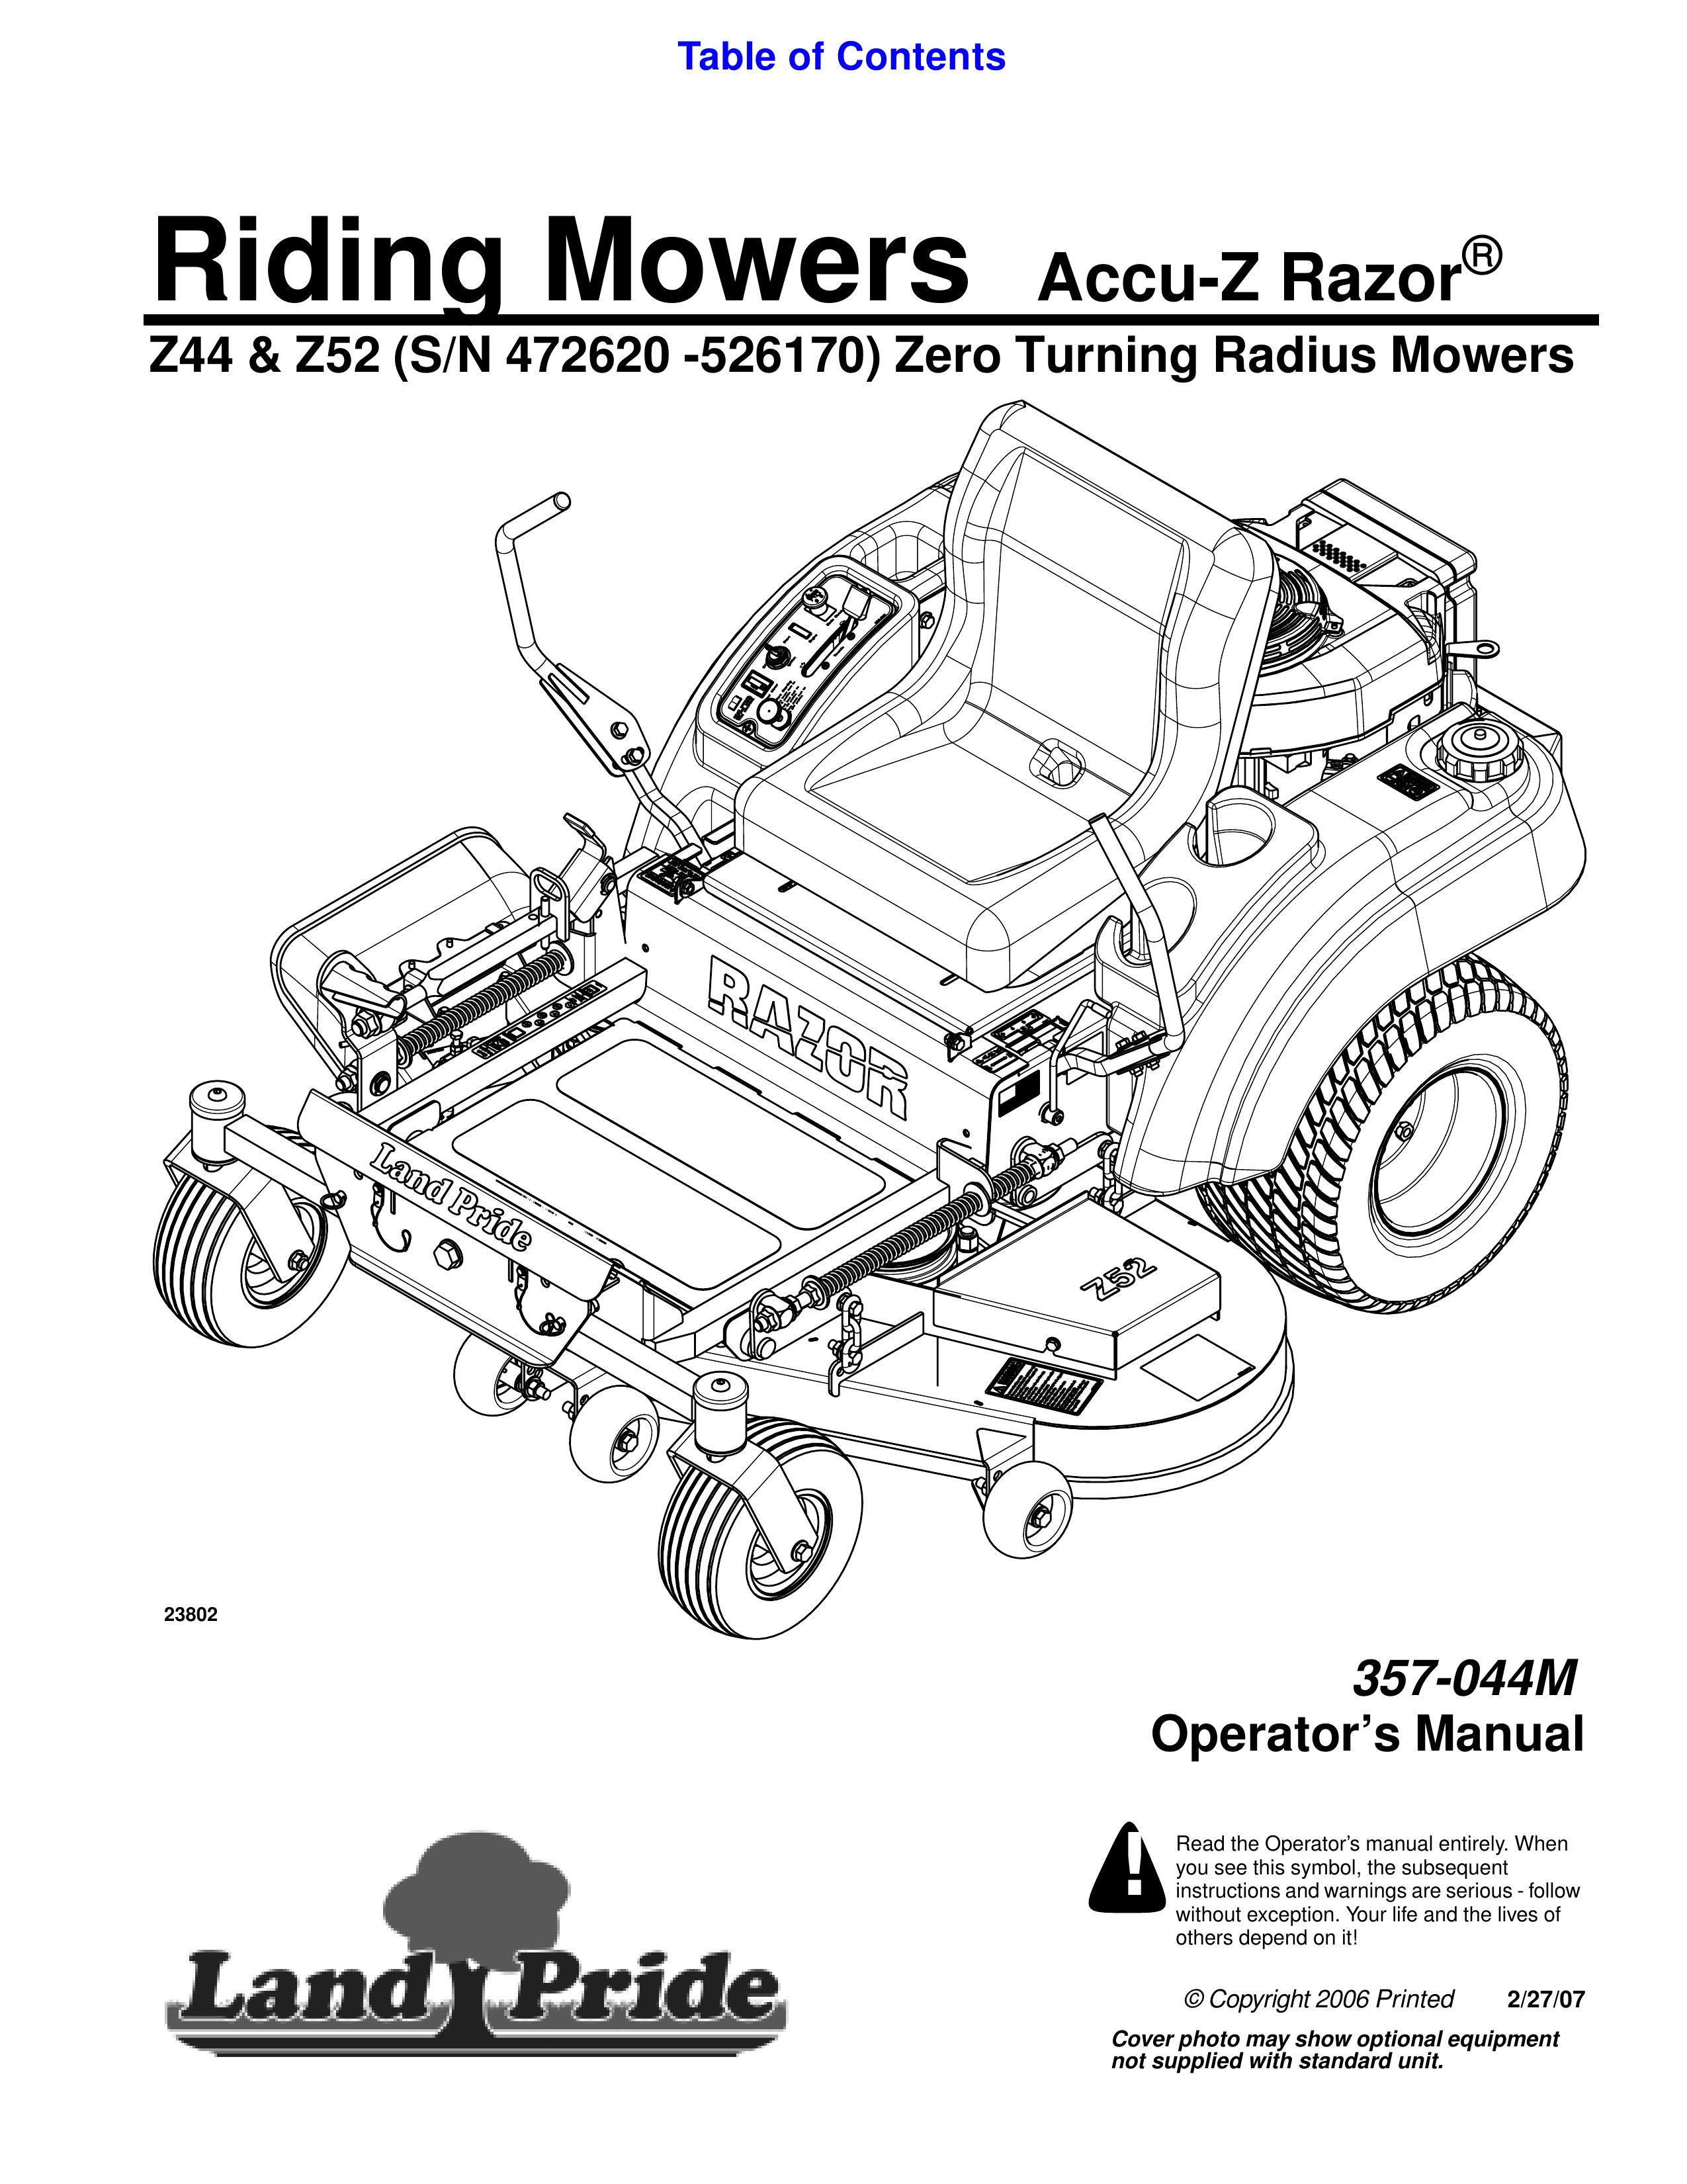 Land Pride 357-044M Lawn Mower User Manual